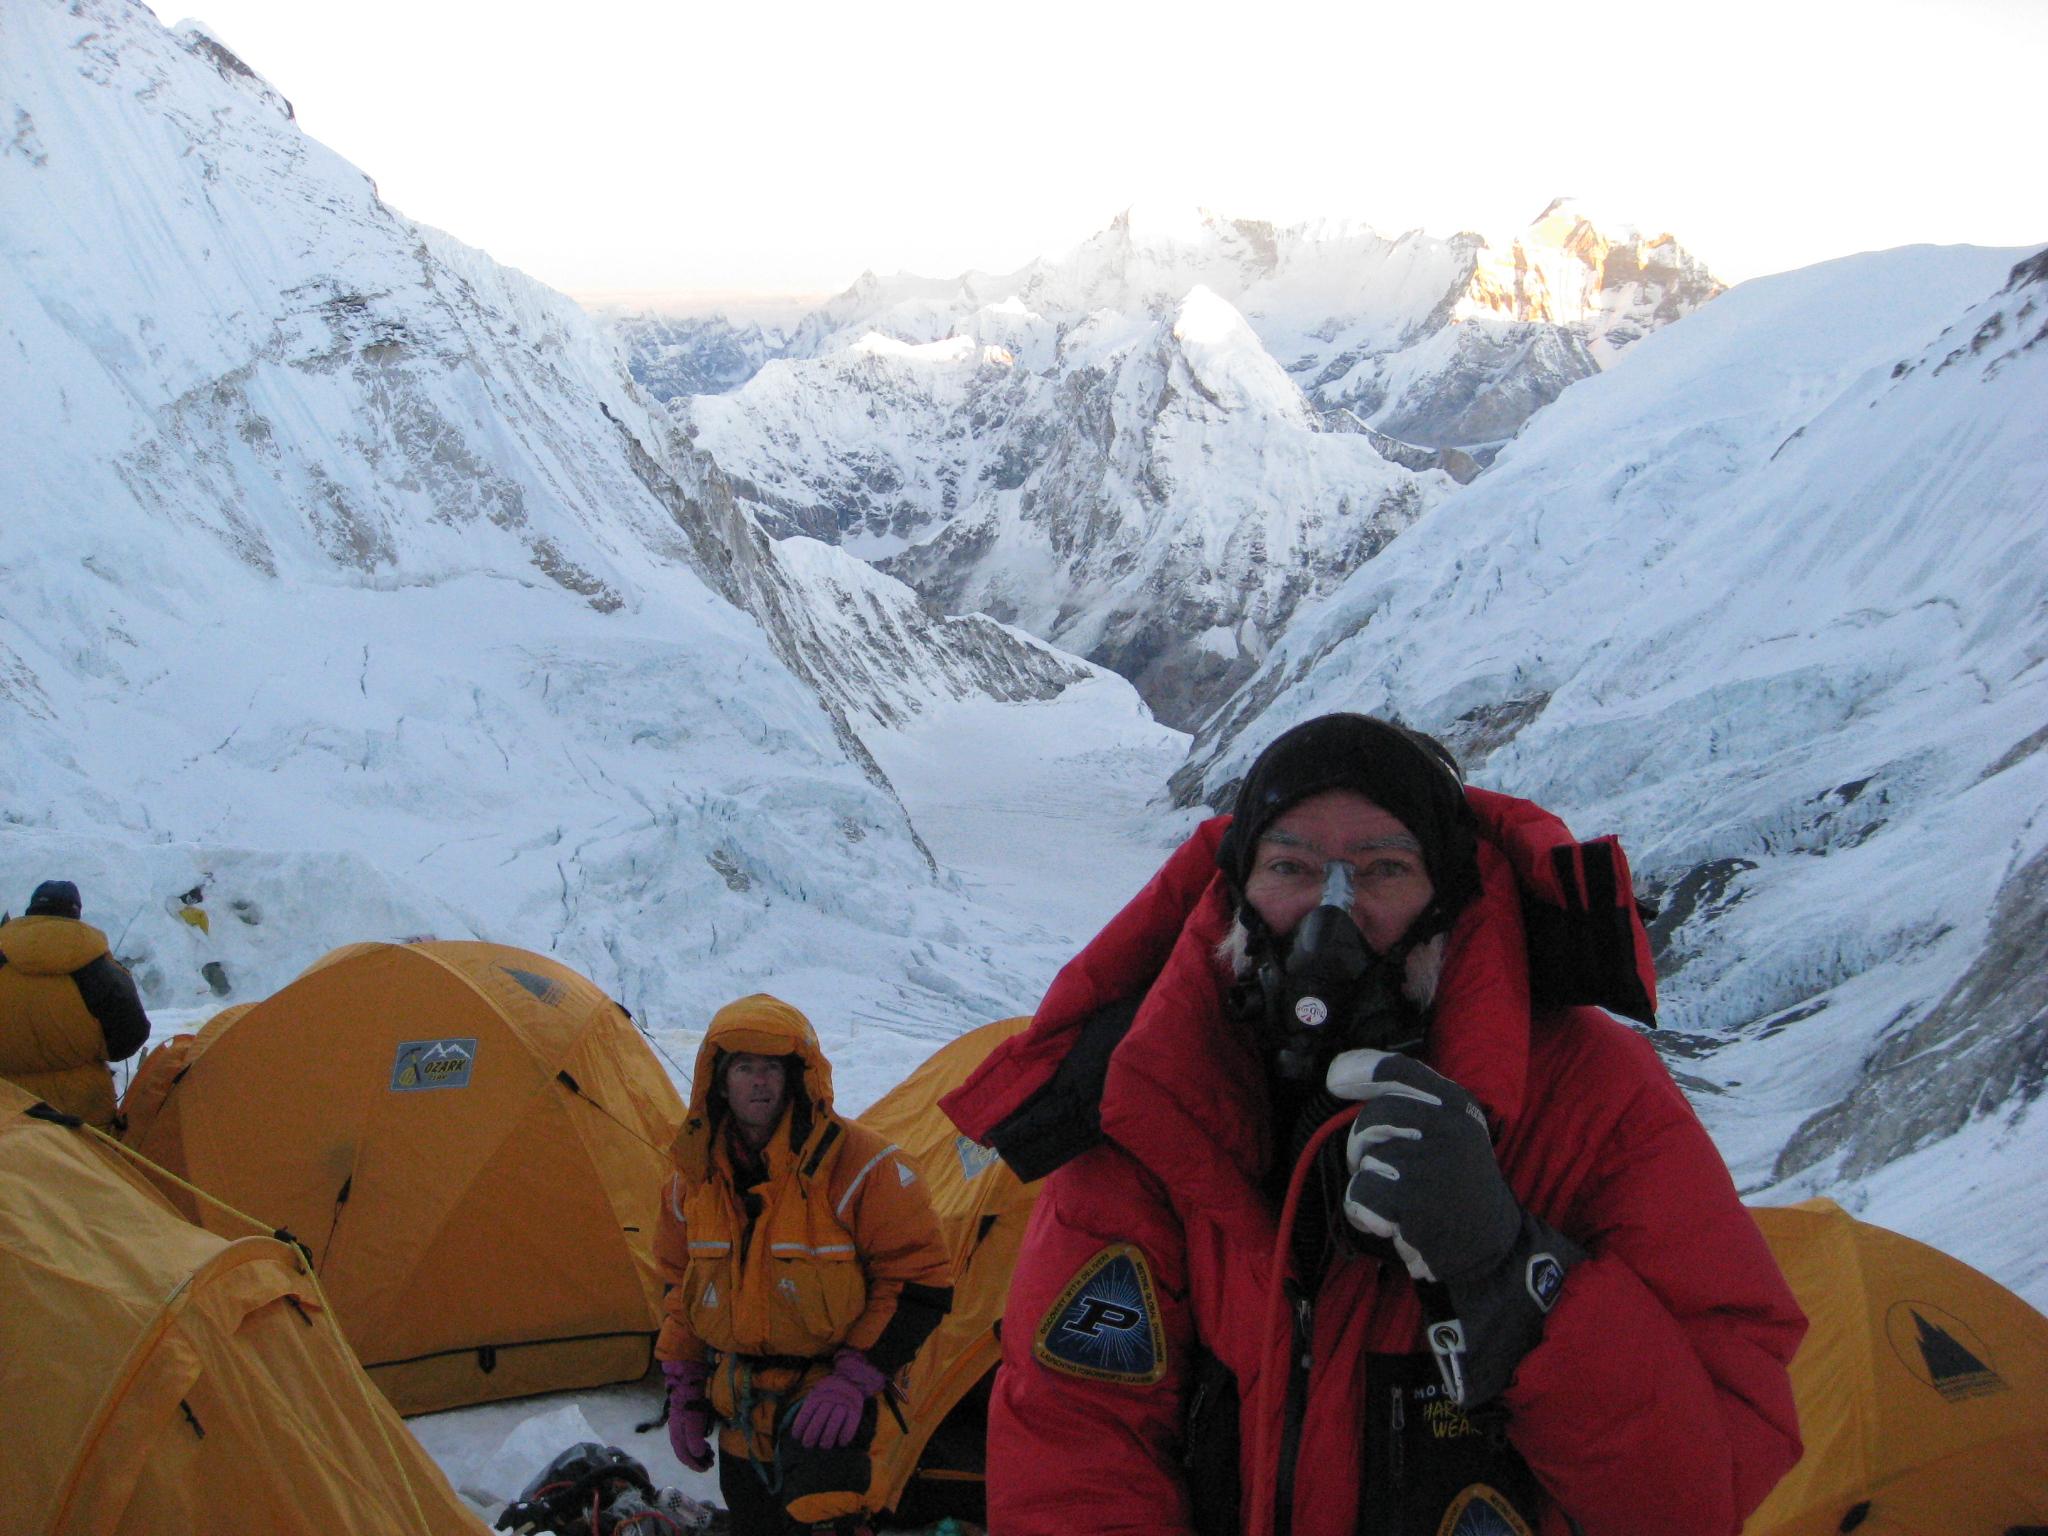 Img 2366-s - Camp Iv Mt Everest - HD Wallpaper 